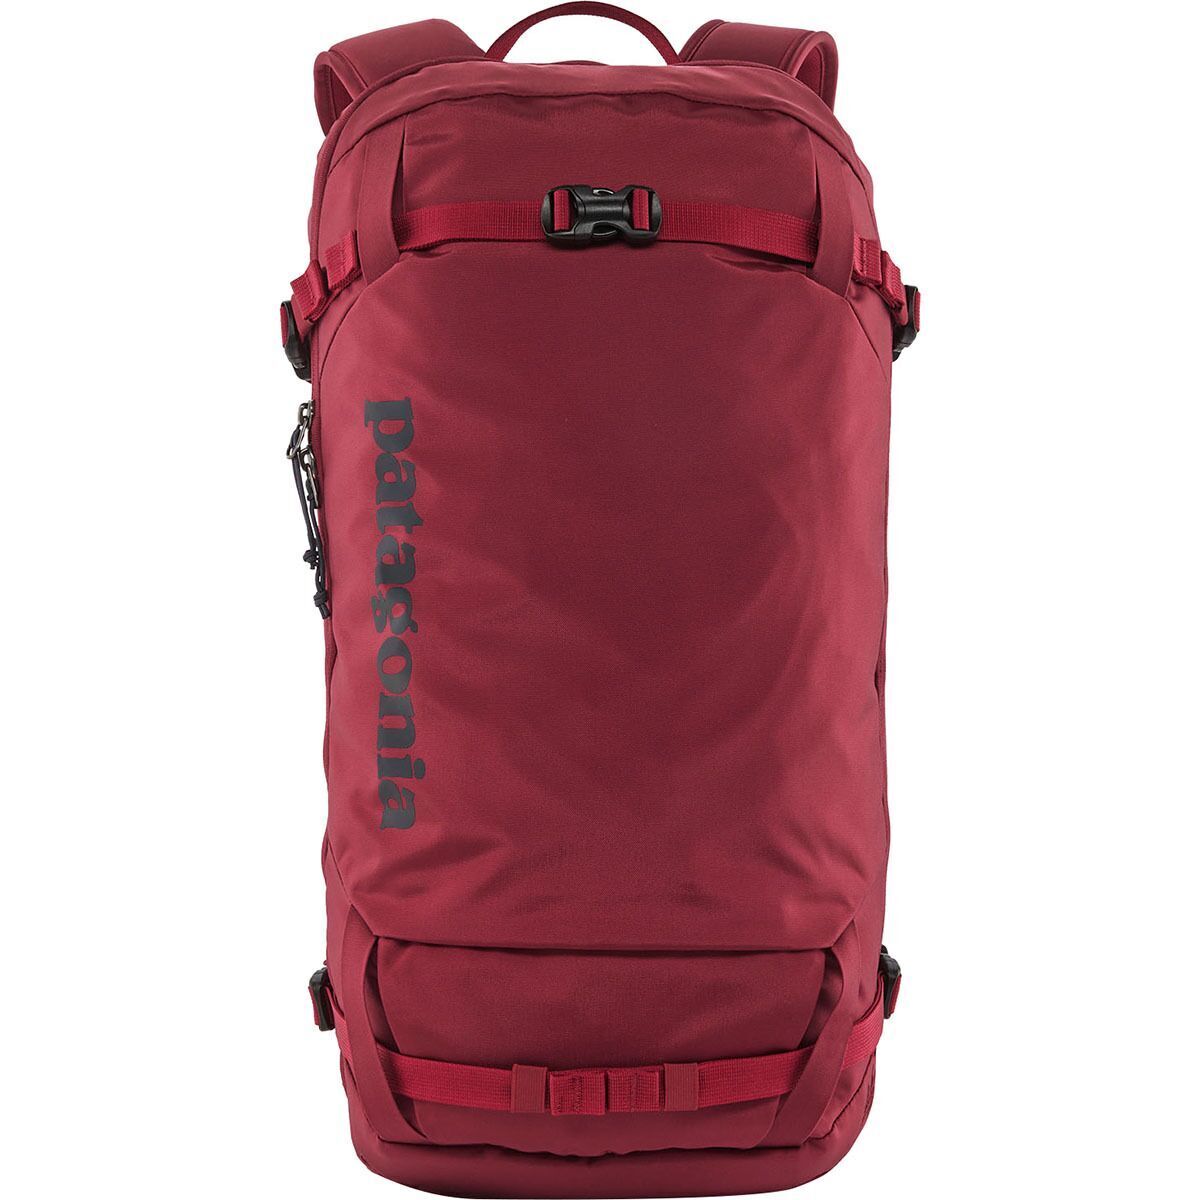 Harvest LM198 Red 16 in. 600D Polyester Standard Backpack